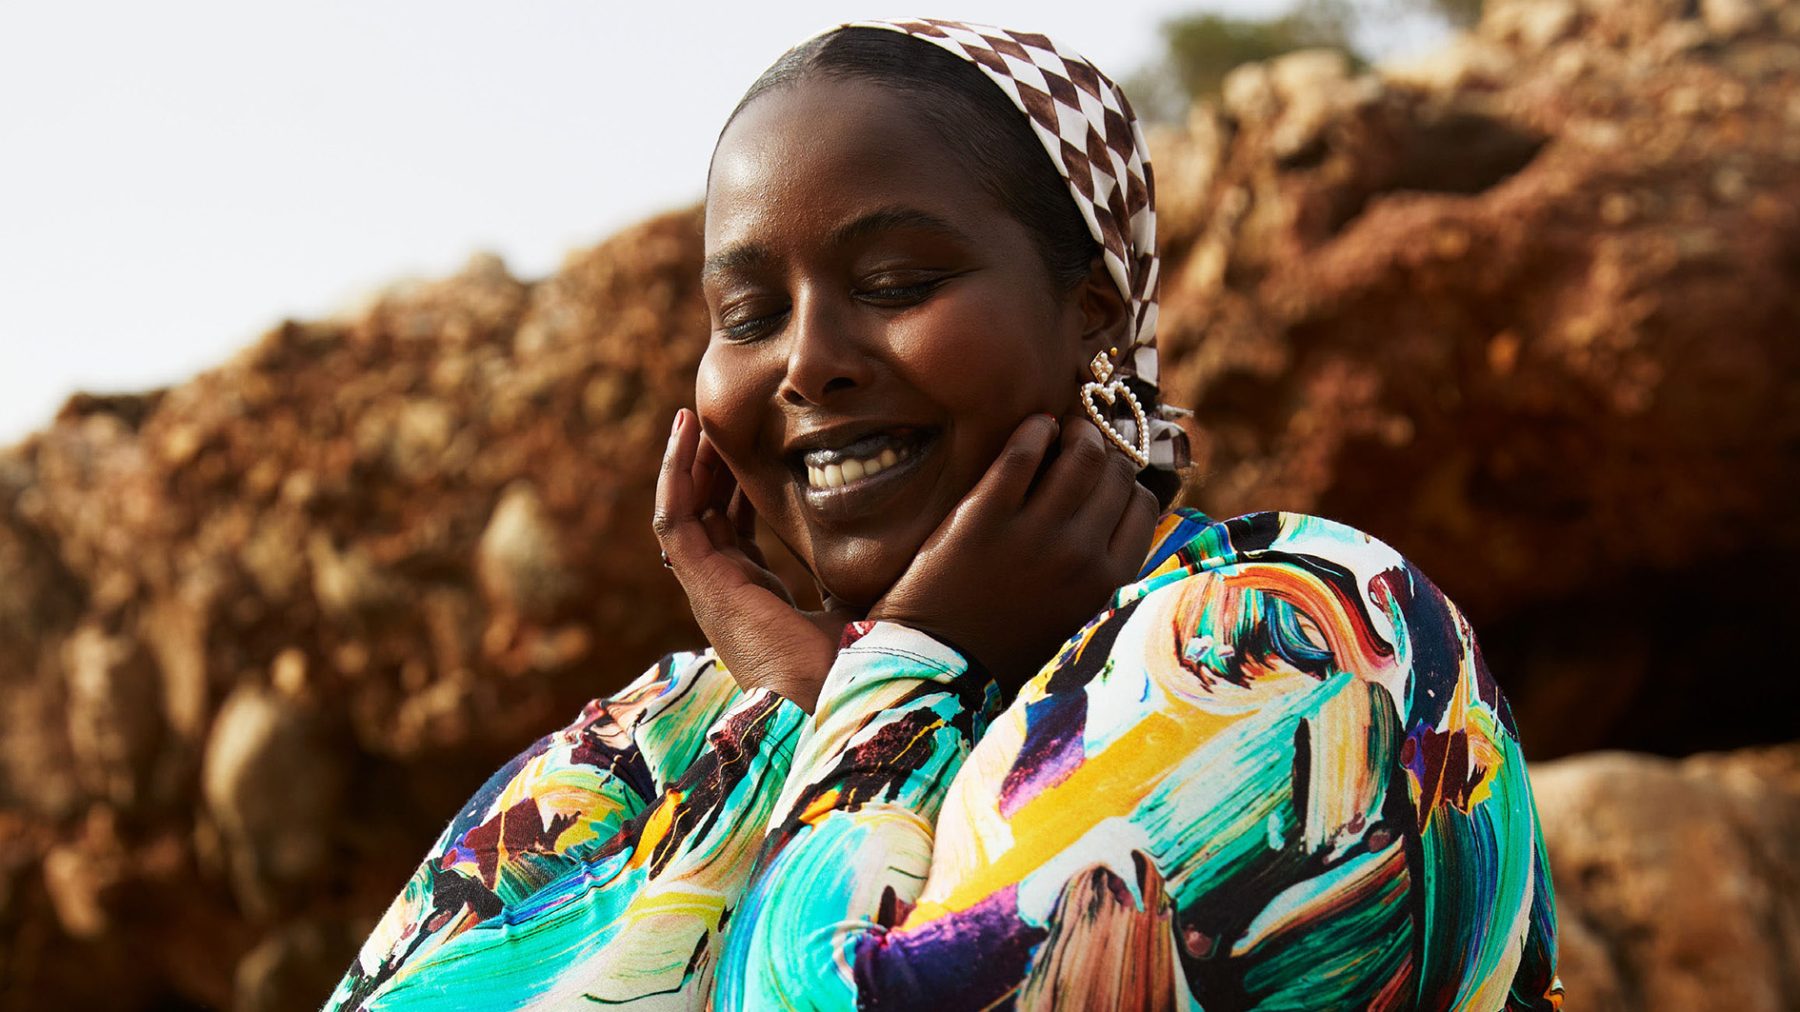 Fatima Warsame